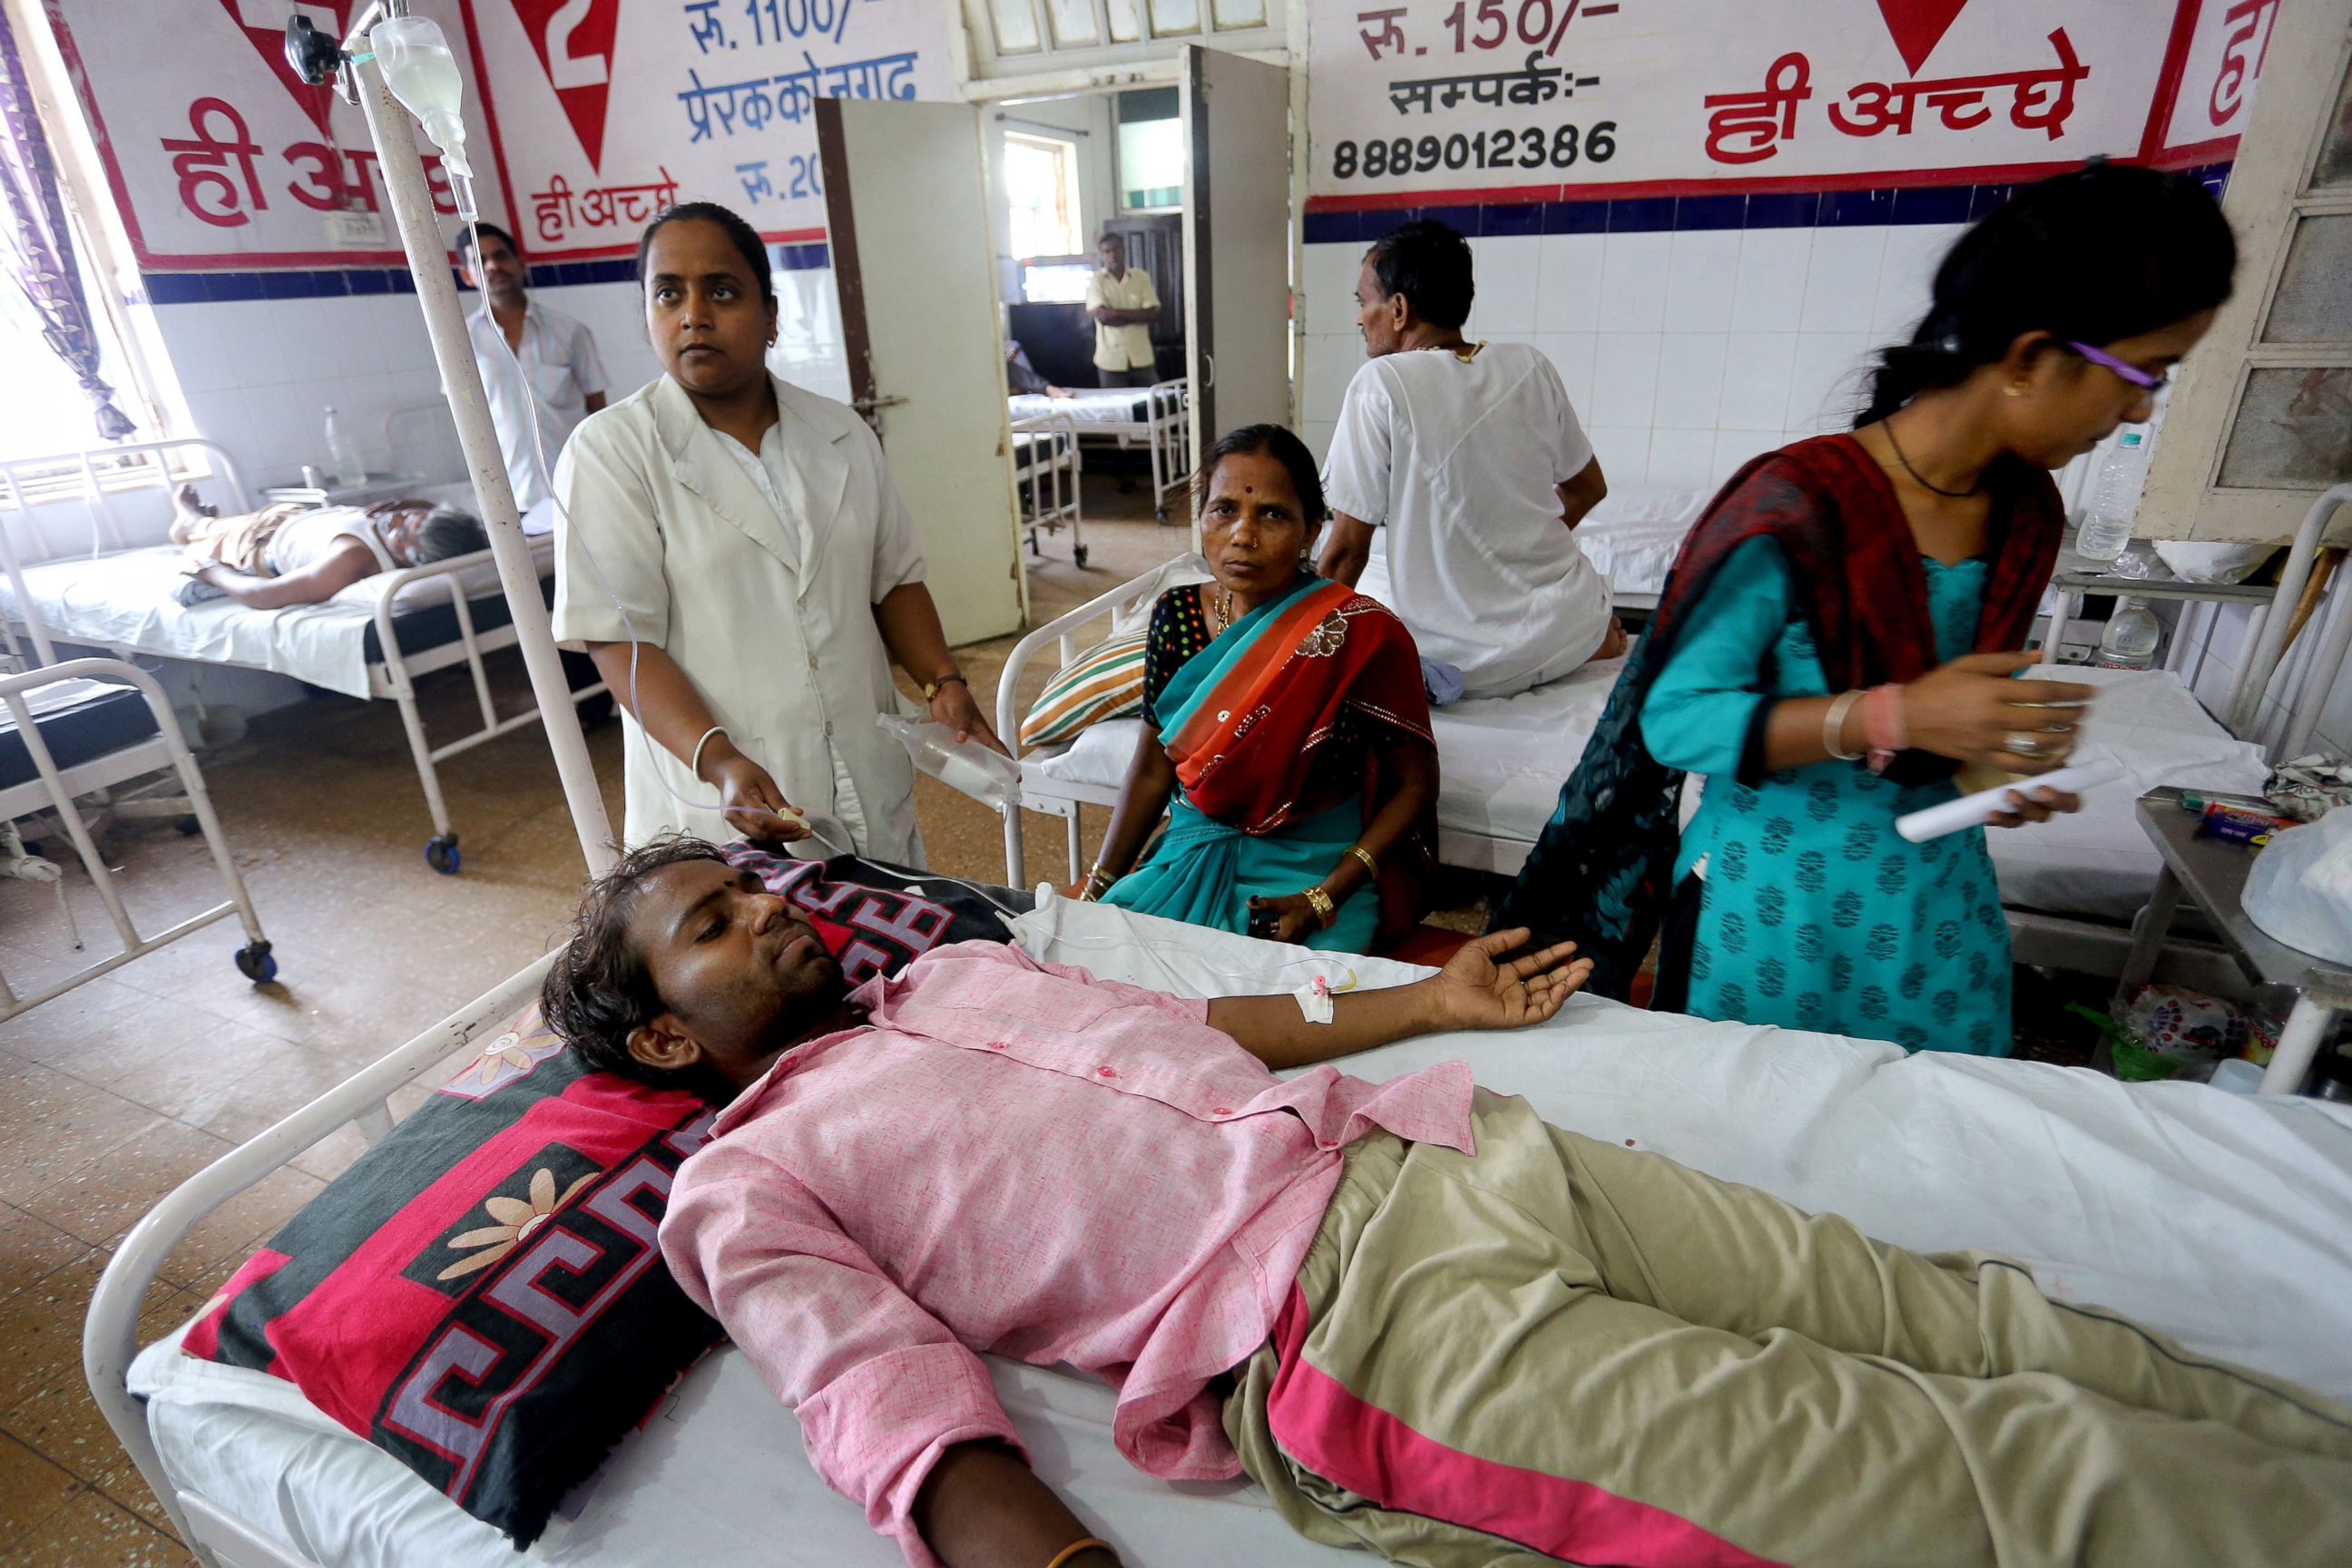 PHOTO: Sunil, 30, gets medical treatment in Jai Prakash Narayan hospital after suffering sunstroke and severe dehydration in Bhopal Madhya Pradesh, India, May 27, 2015.